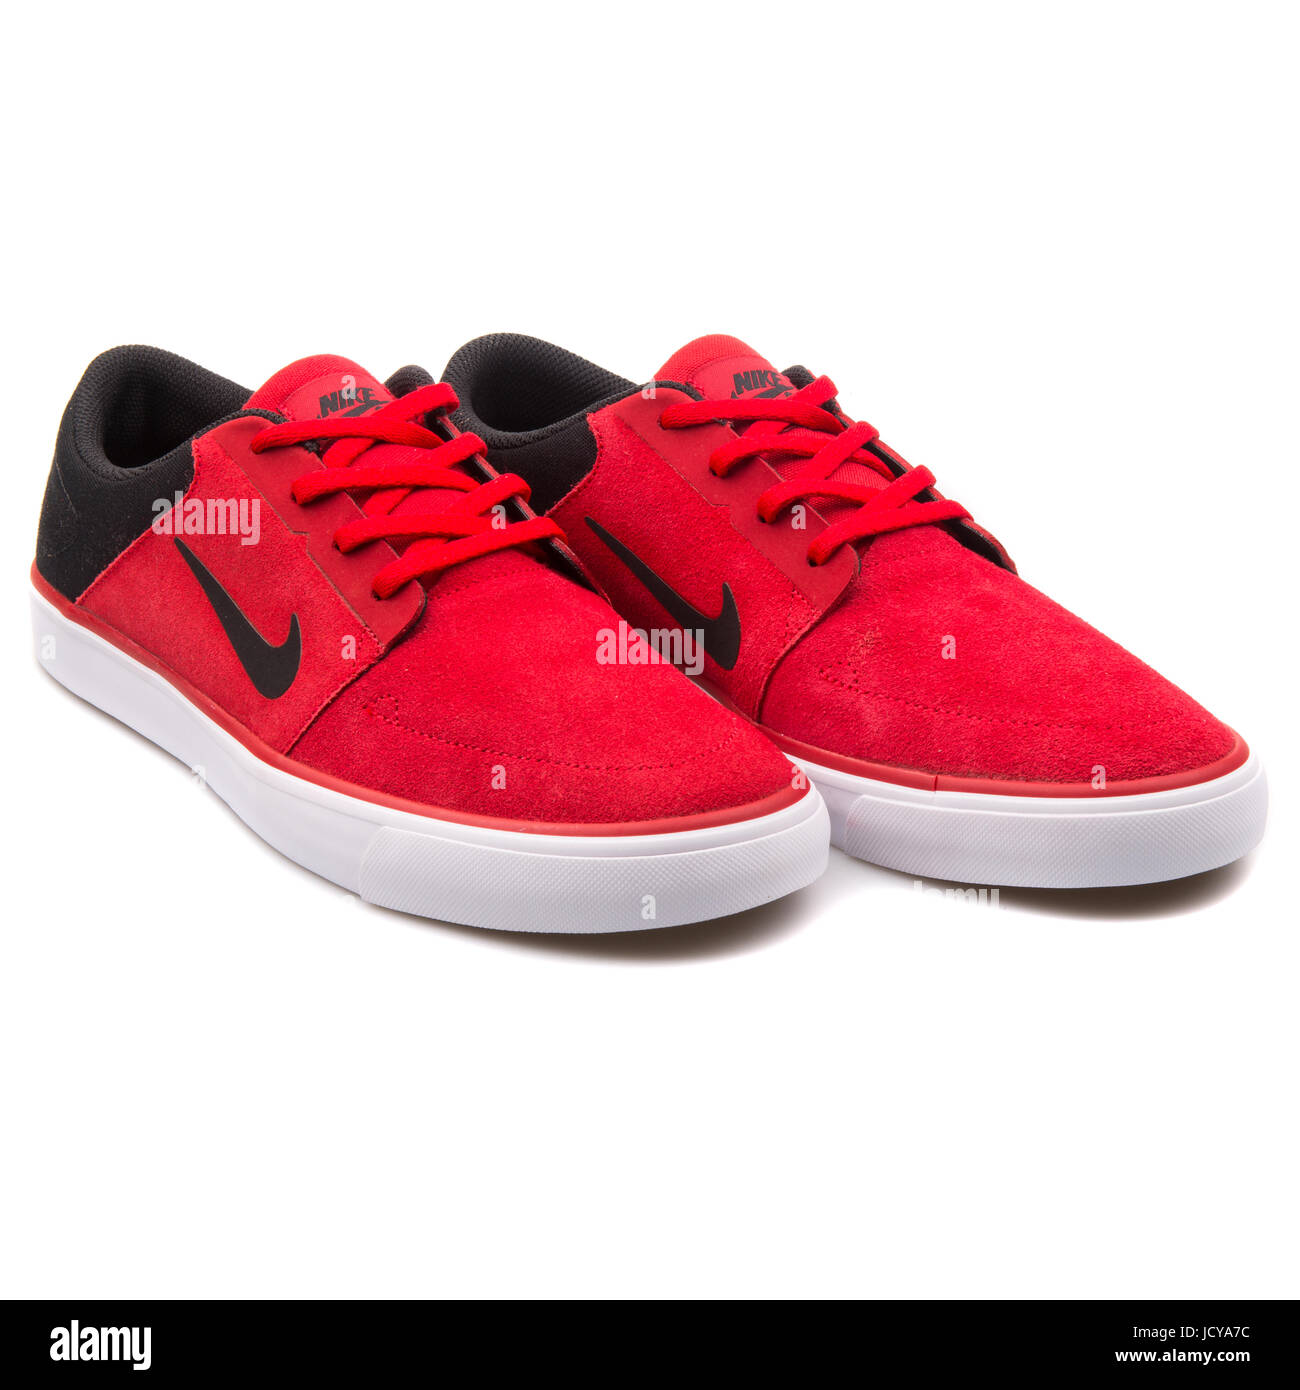 Nike SB Portmore Gym Red, Black and White Men's Skateboarding Shoes -  725027-601 Stock Photo - Alamy